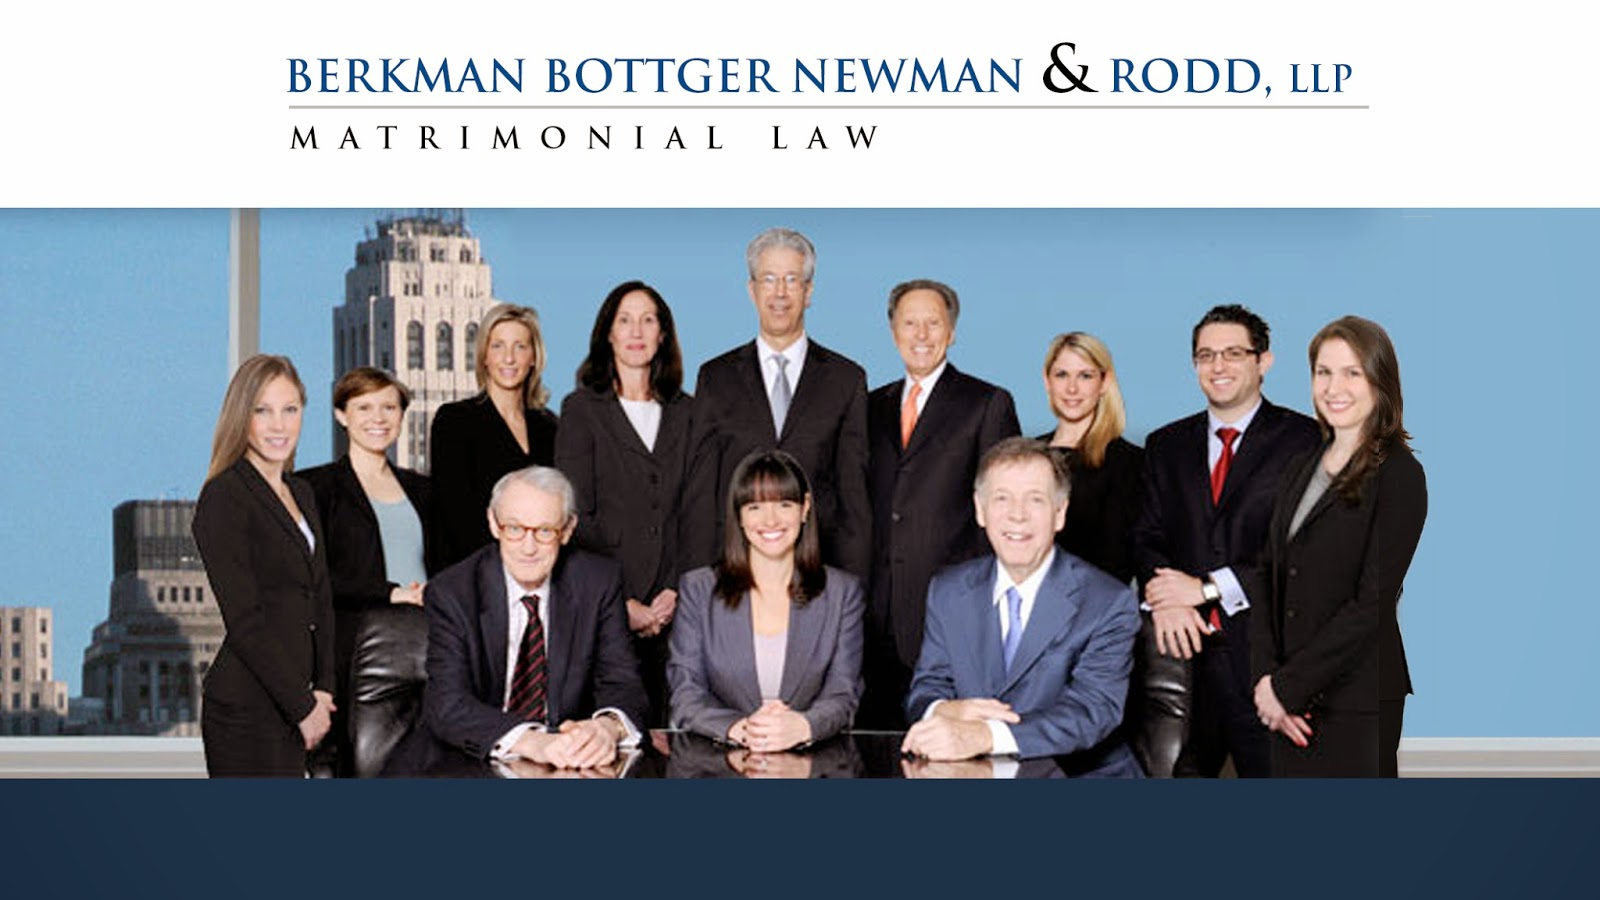 Photo of Berkman Bottger Newman & Rodd, LLP in New York City, New York, United States - 3 Picture of Point of interest, Establishment, Lawyer